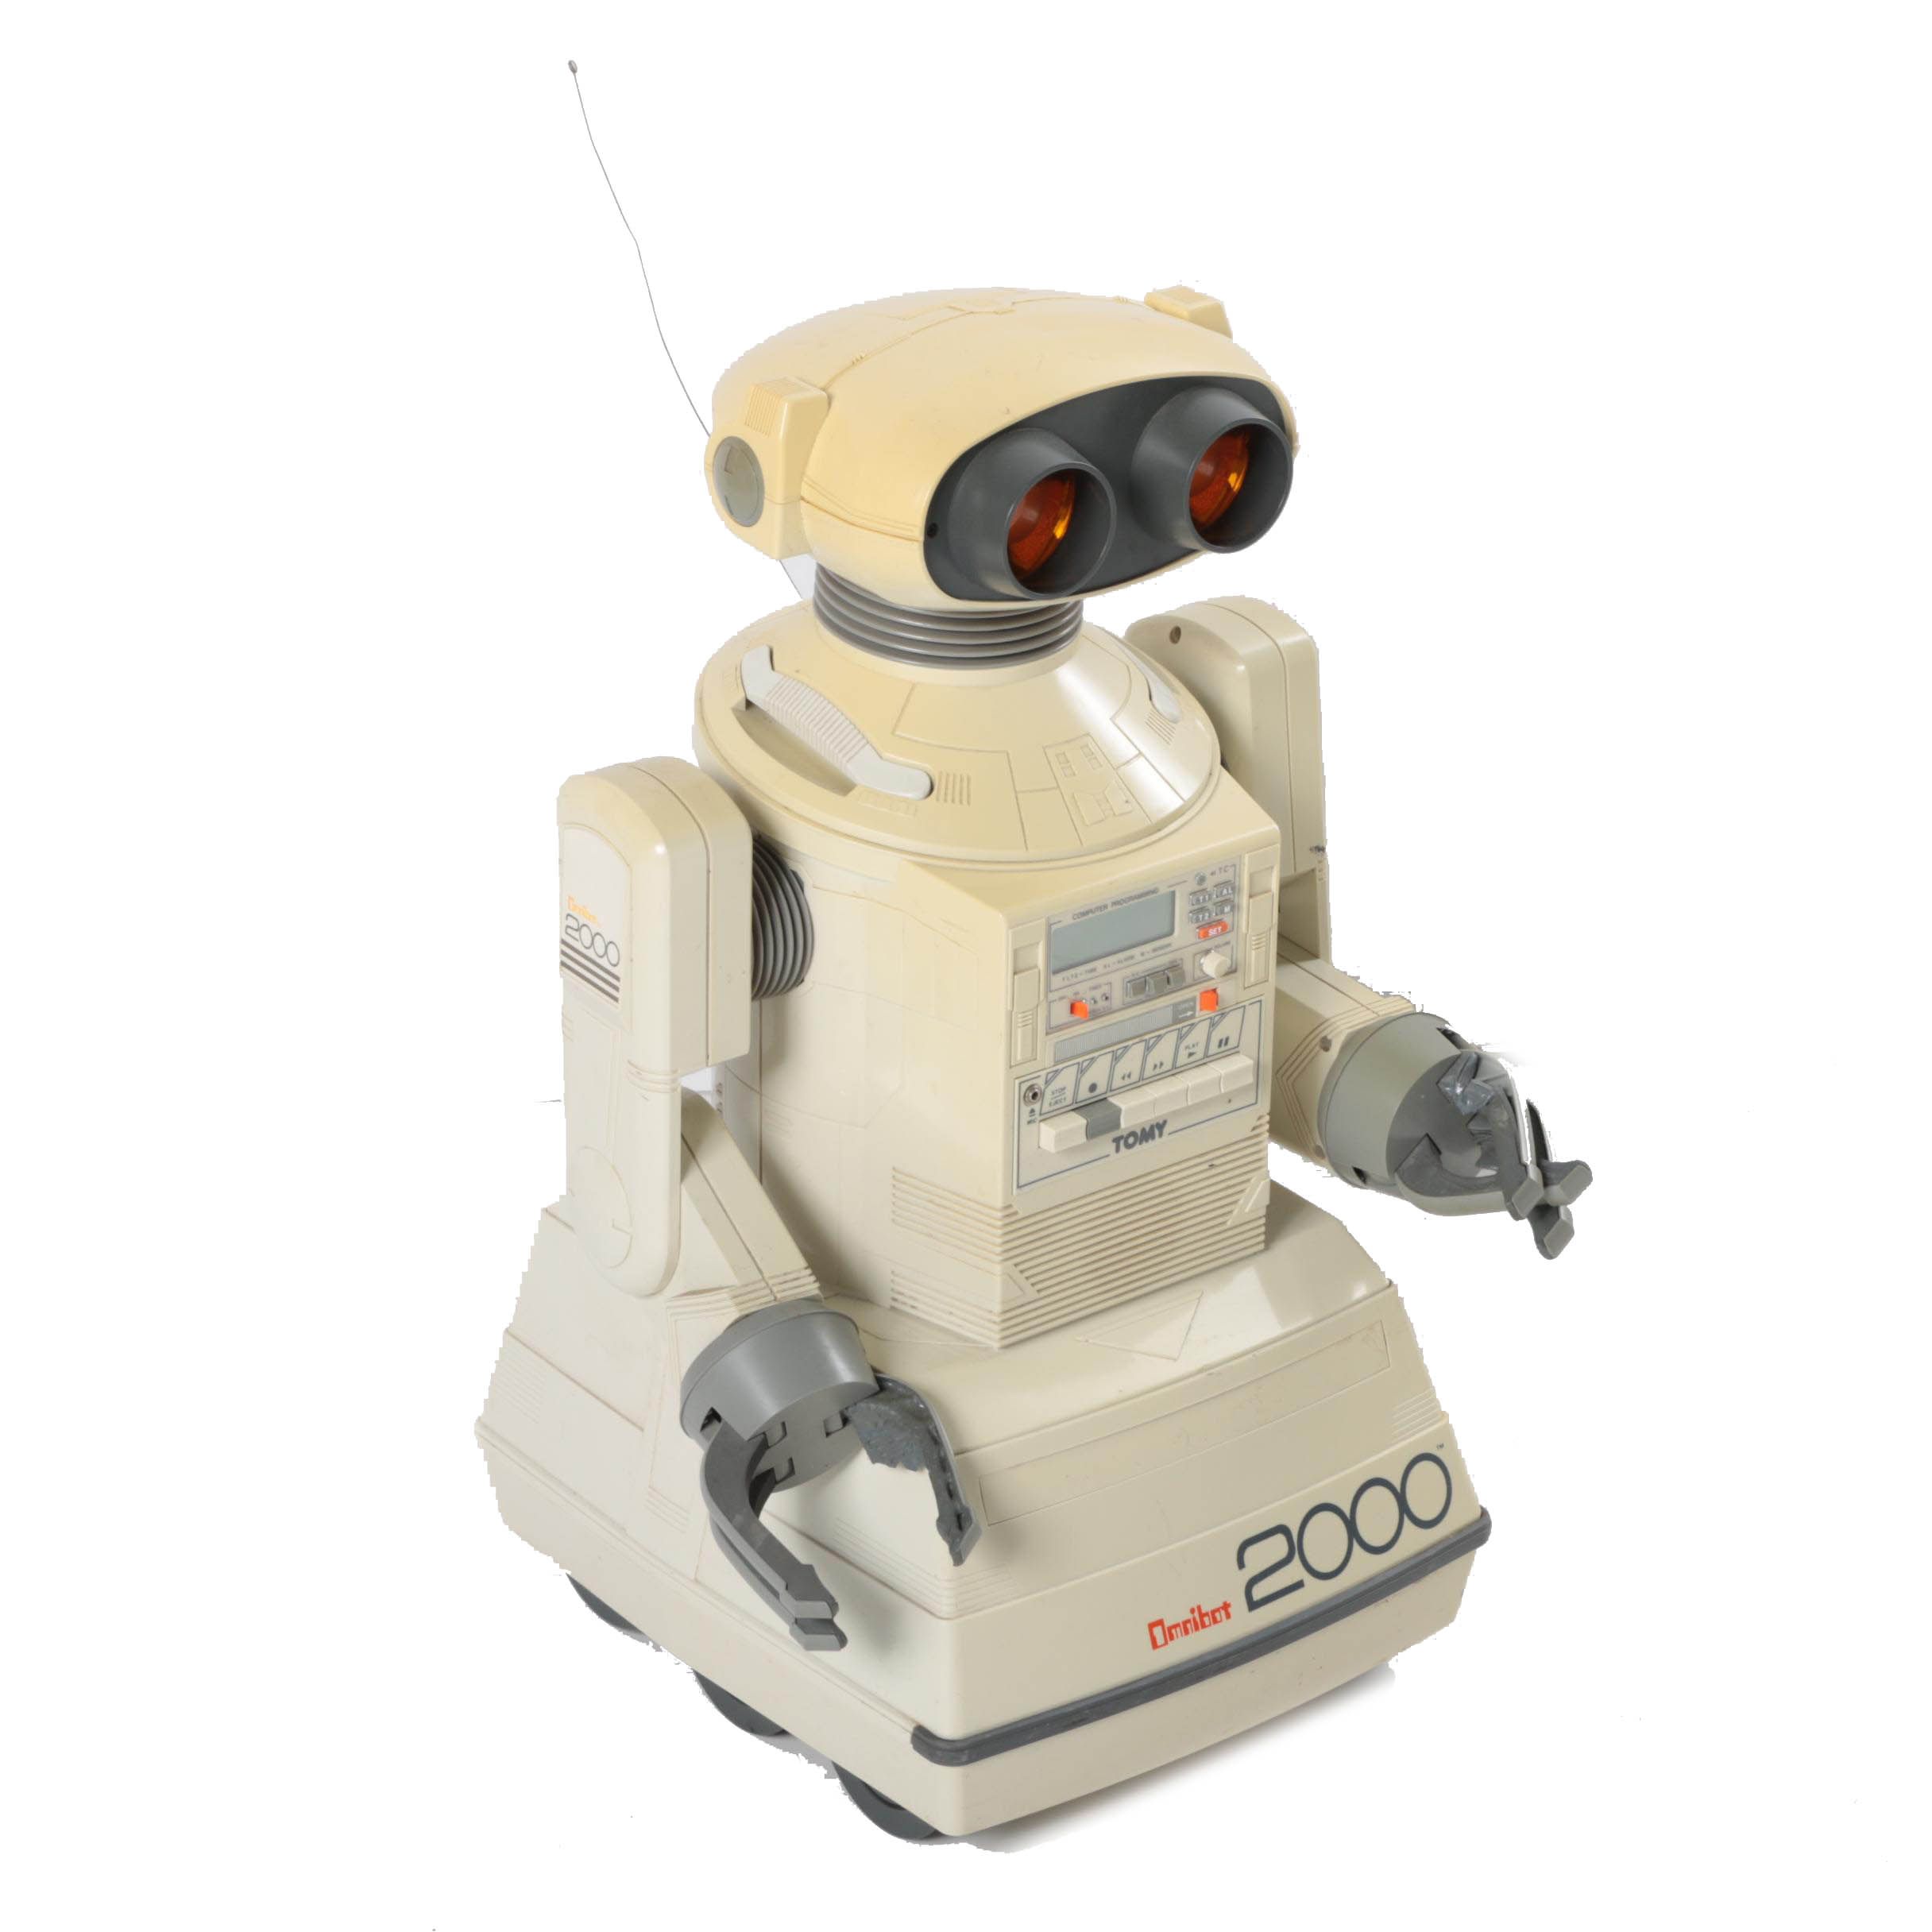 omnibot 2000 for sale